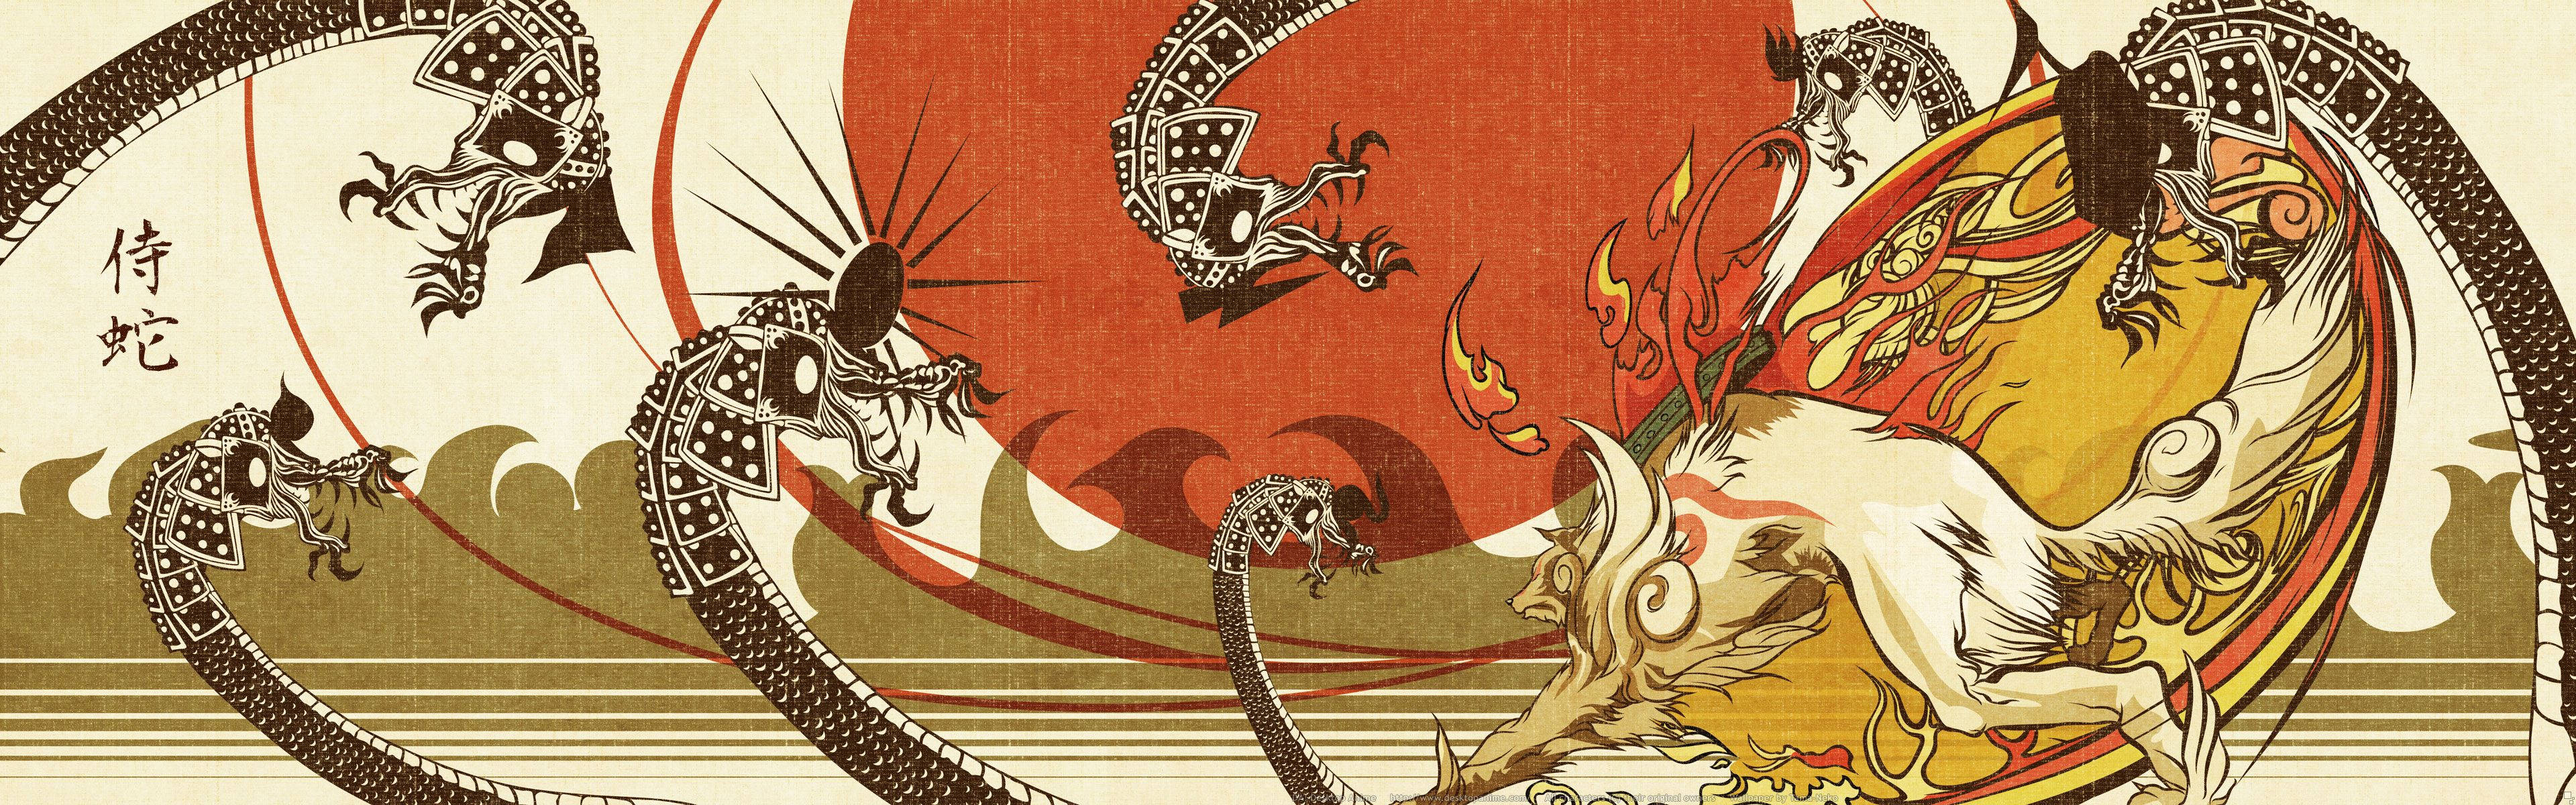 Widescreen Epic Okami War Wallpaper